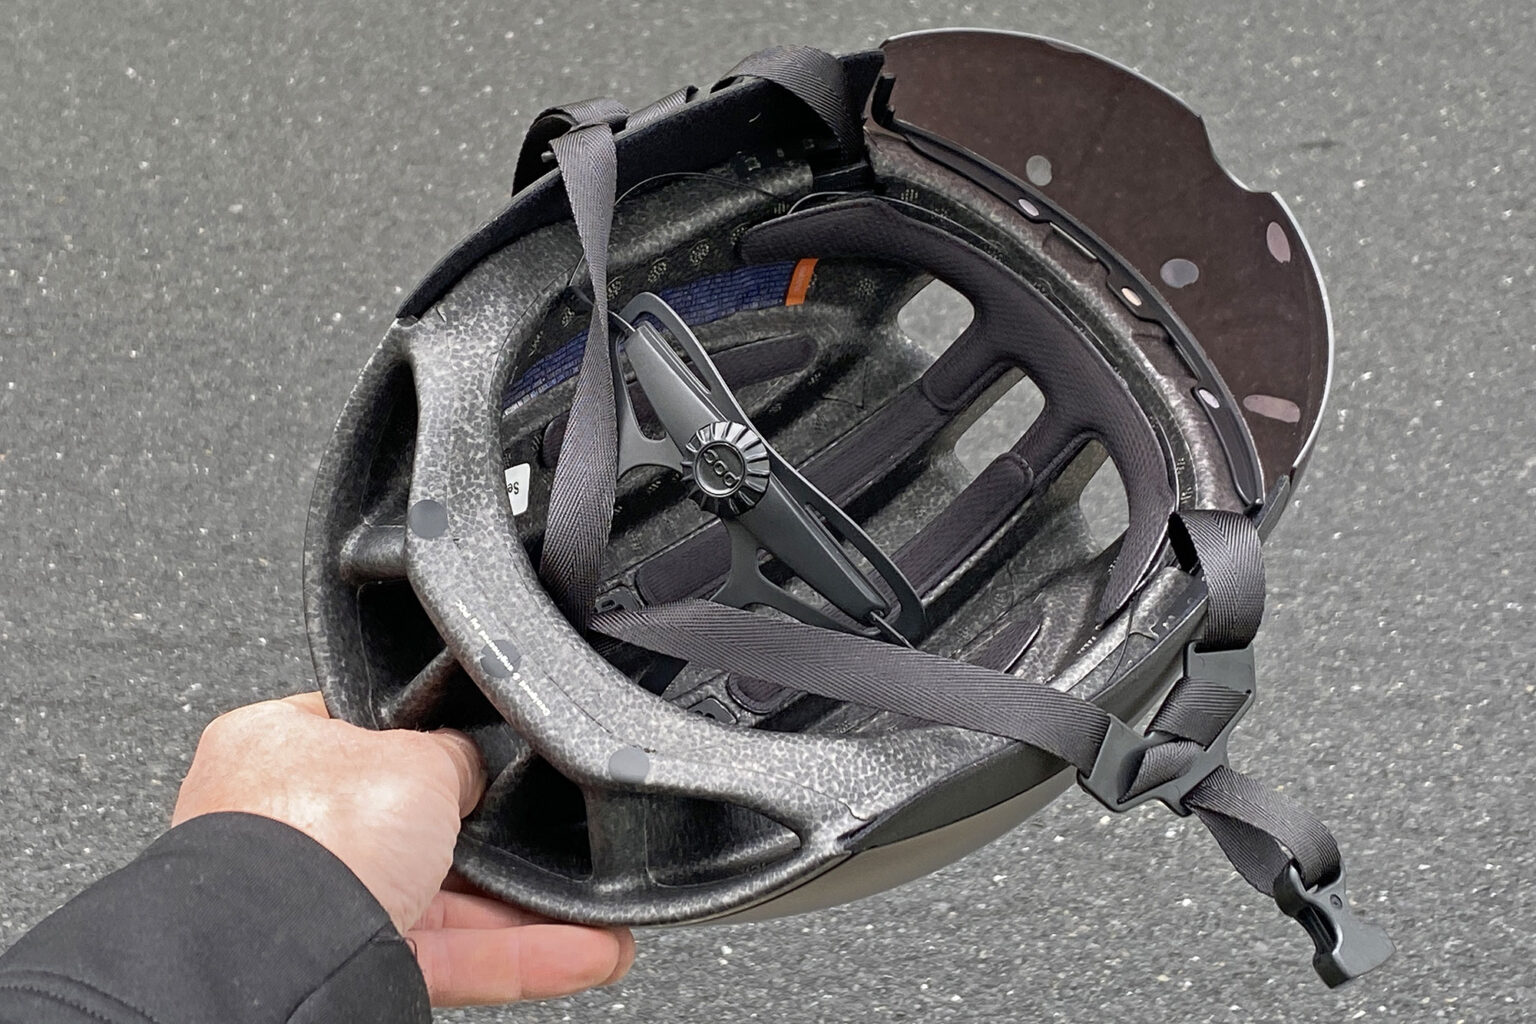 POC-Procen-Air-mini-aero-road-race-helmet-inspired-by-TT-aerodynamics_inside-with-visor-1536x1024.jpg